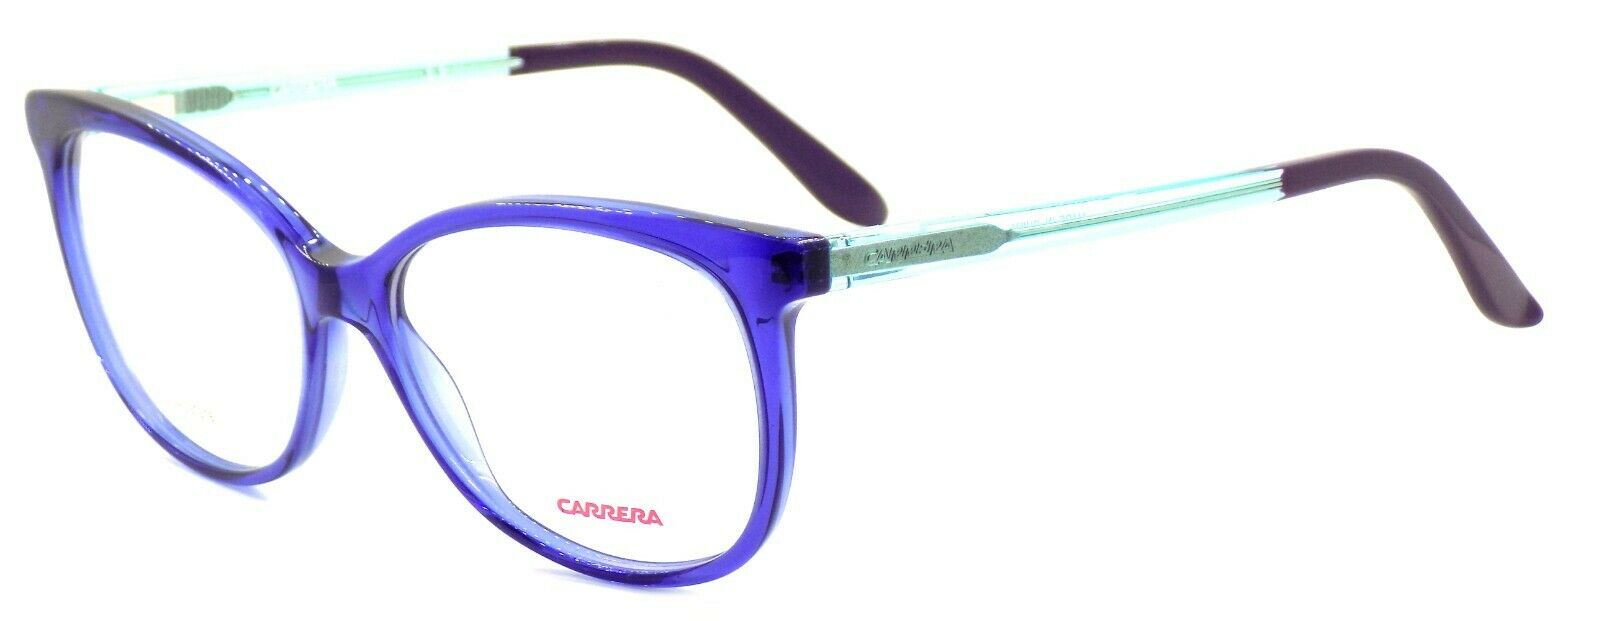 1-Carrera CA6648 QKA Women's Eyeglasses Frames 53-15-140 Blue / Turquoise + CASE-762753671455-IKSpecs